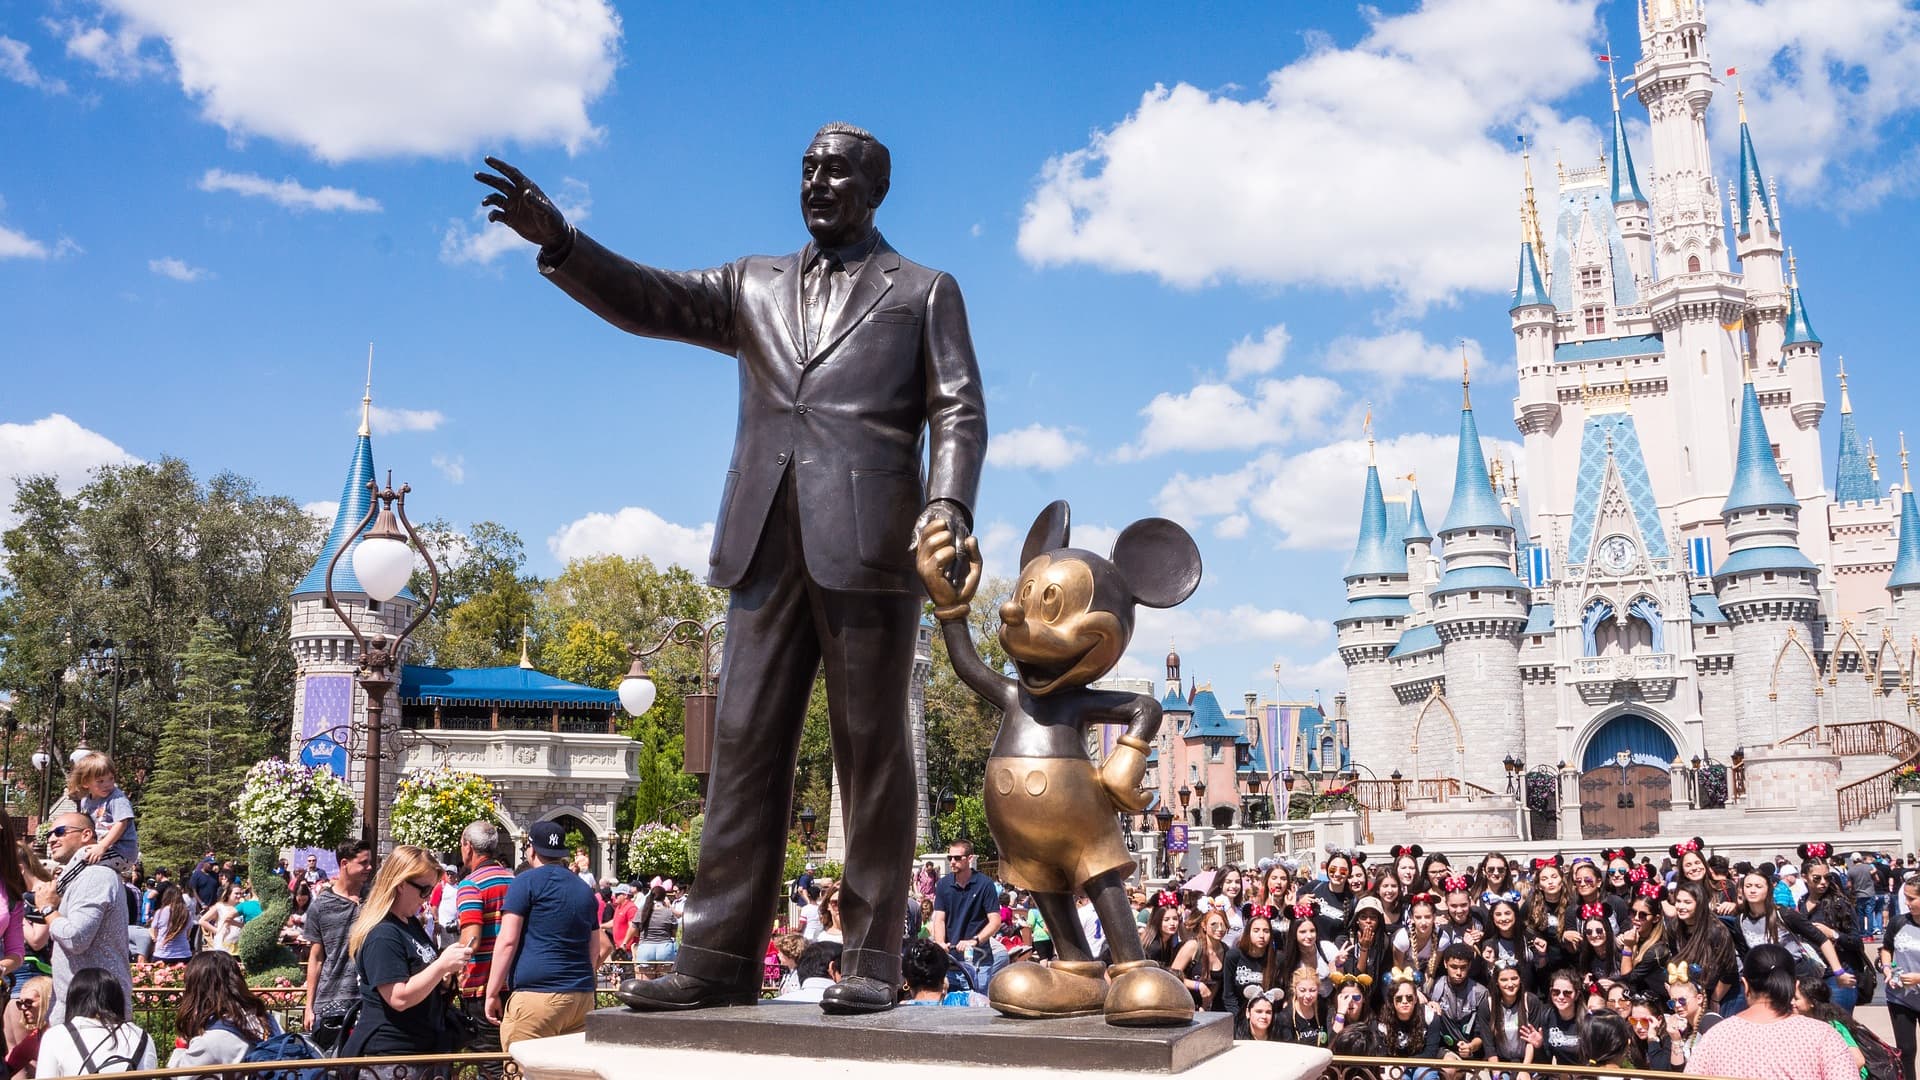 La Disney svela i piani per tagliare i costi